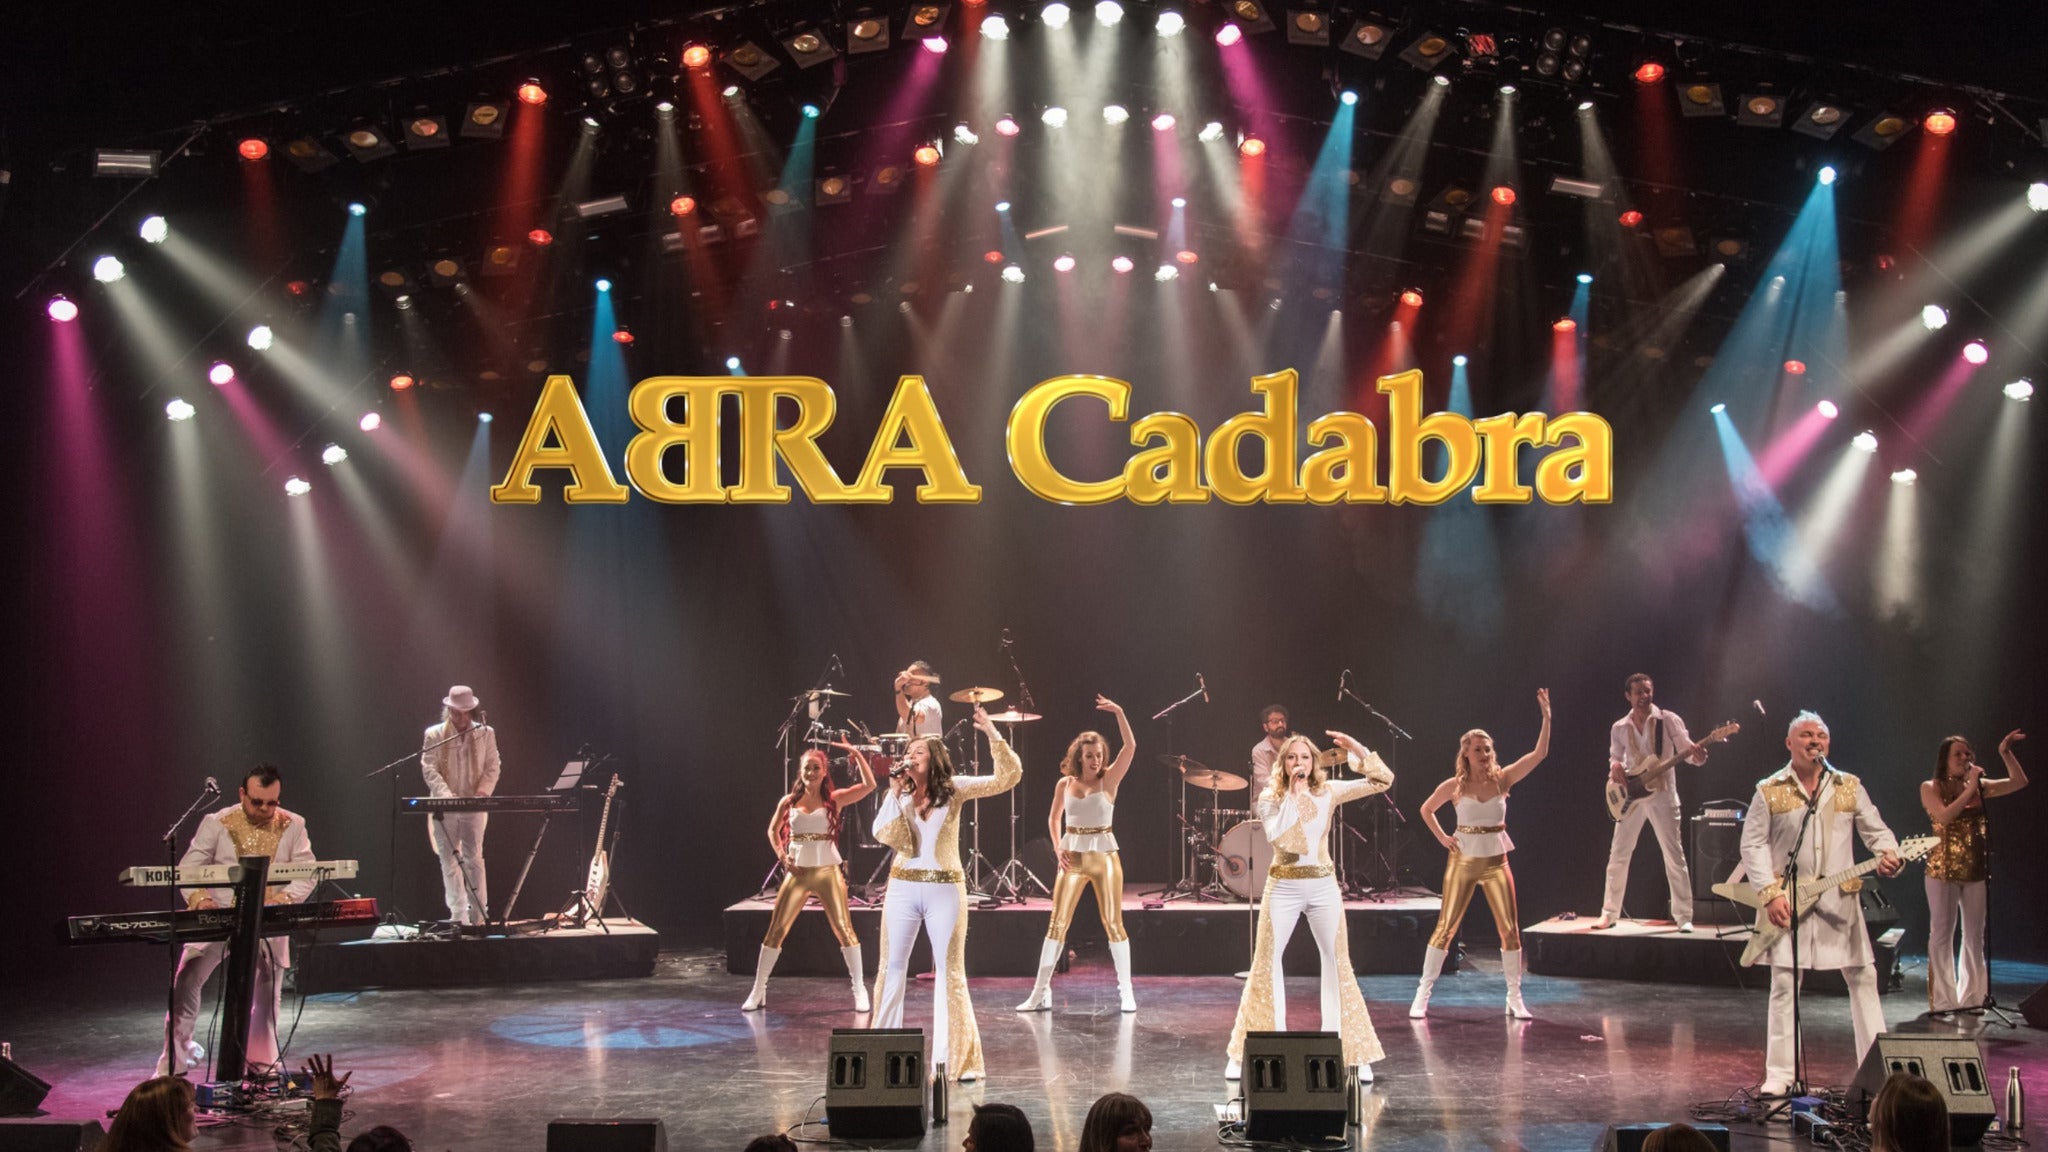 ABRA Cadabra - A Tribute To The Music And Magic Of Abba in Richmond promo photo for Encore Member presale offer code